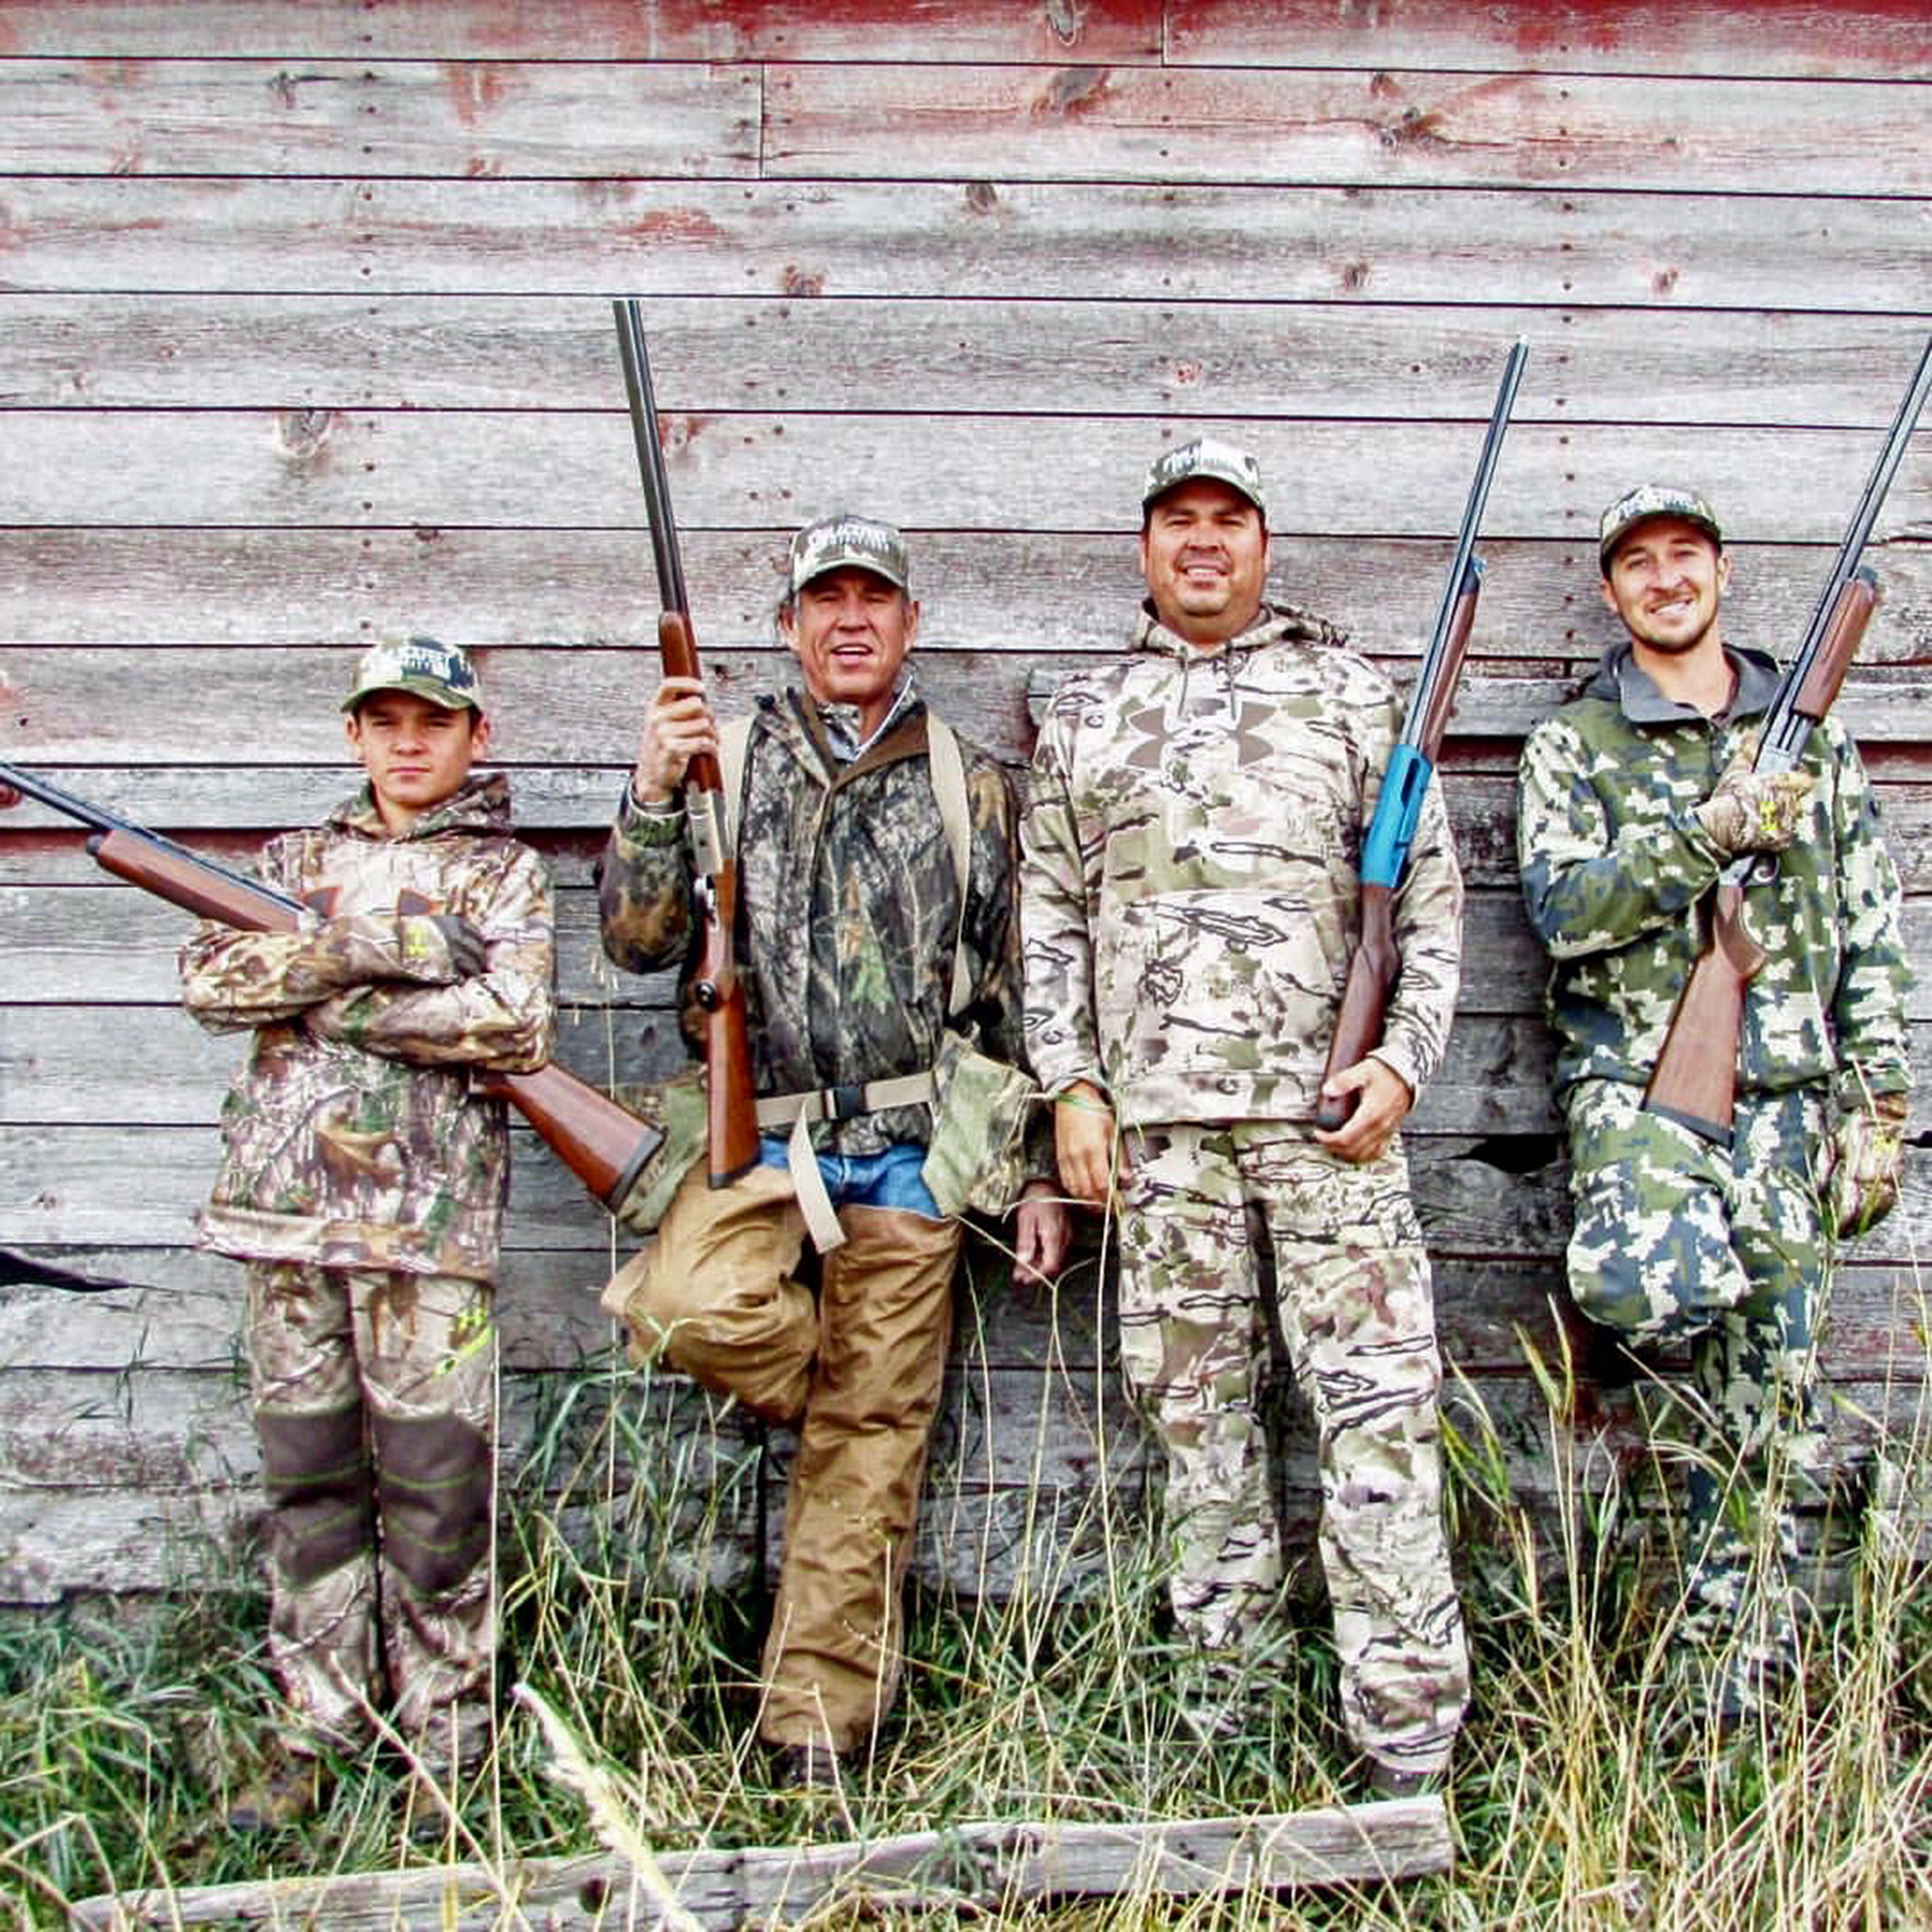 Bird hunting group